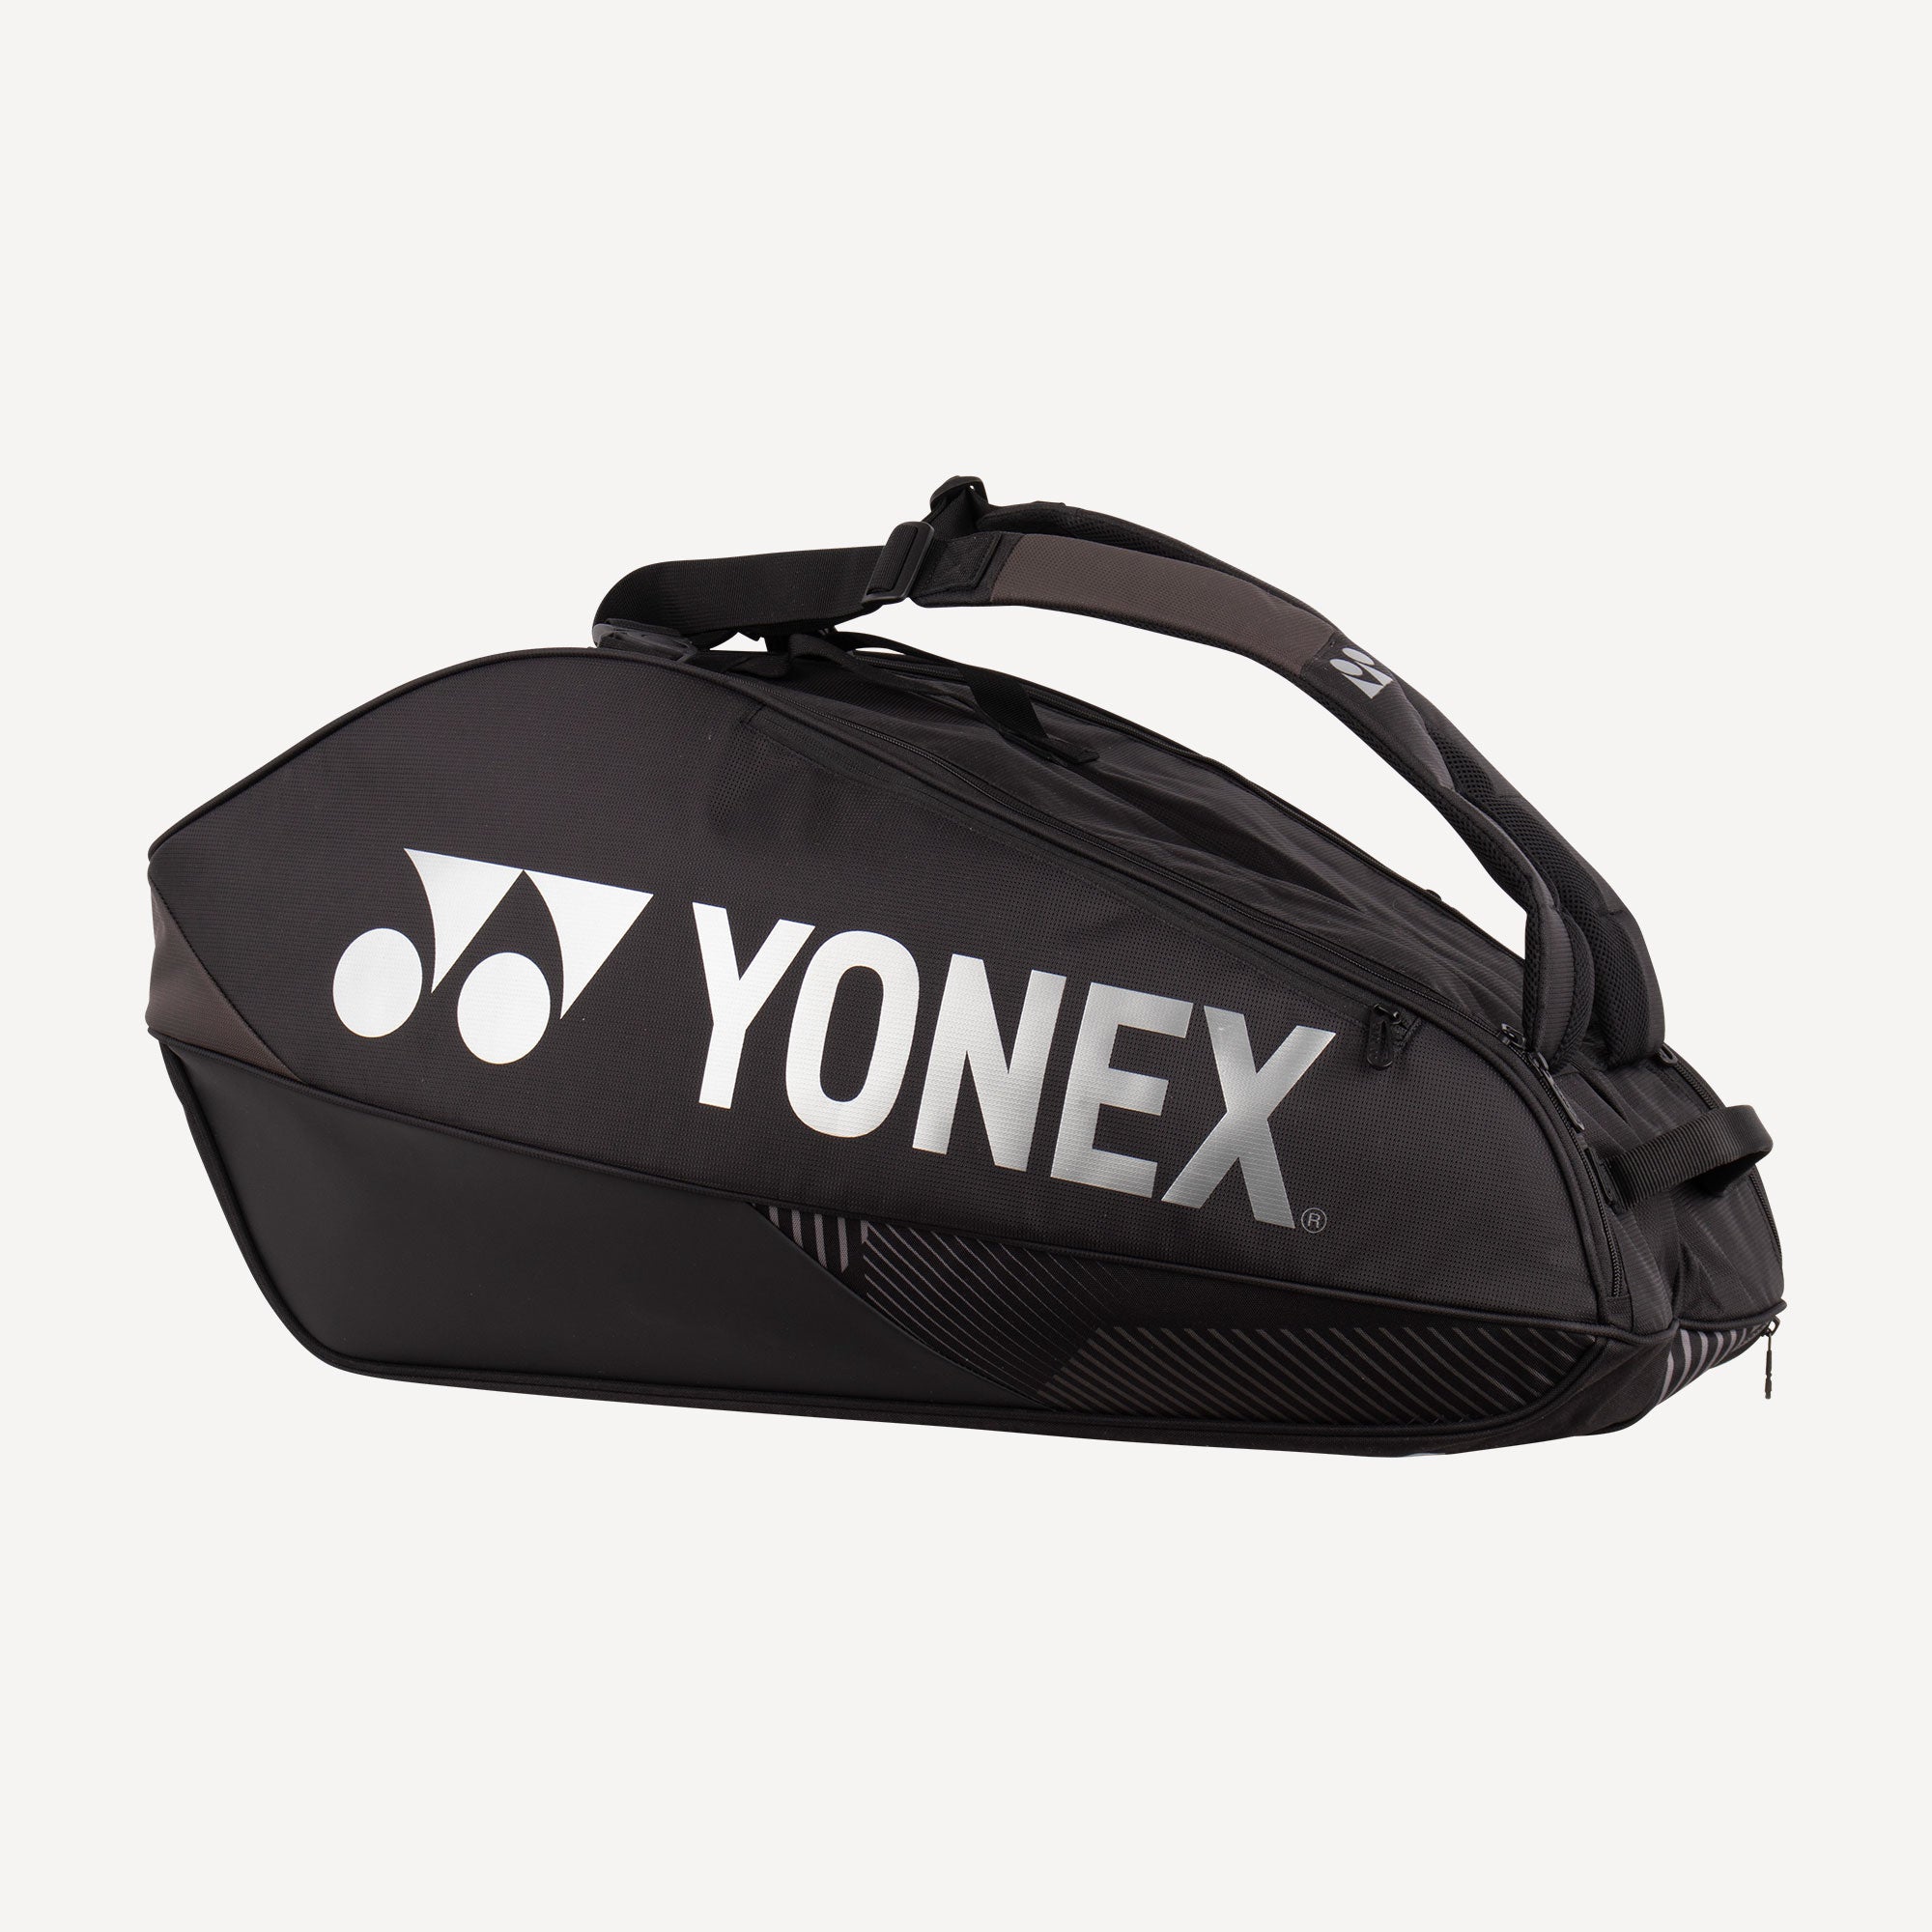 Yonex Pro 6 Racket Tennis Bag - Black (2)